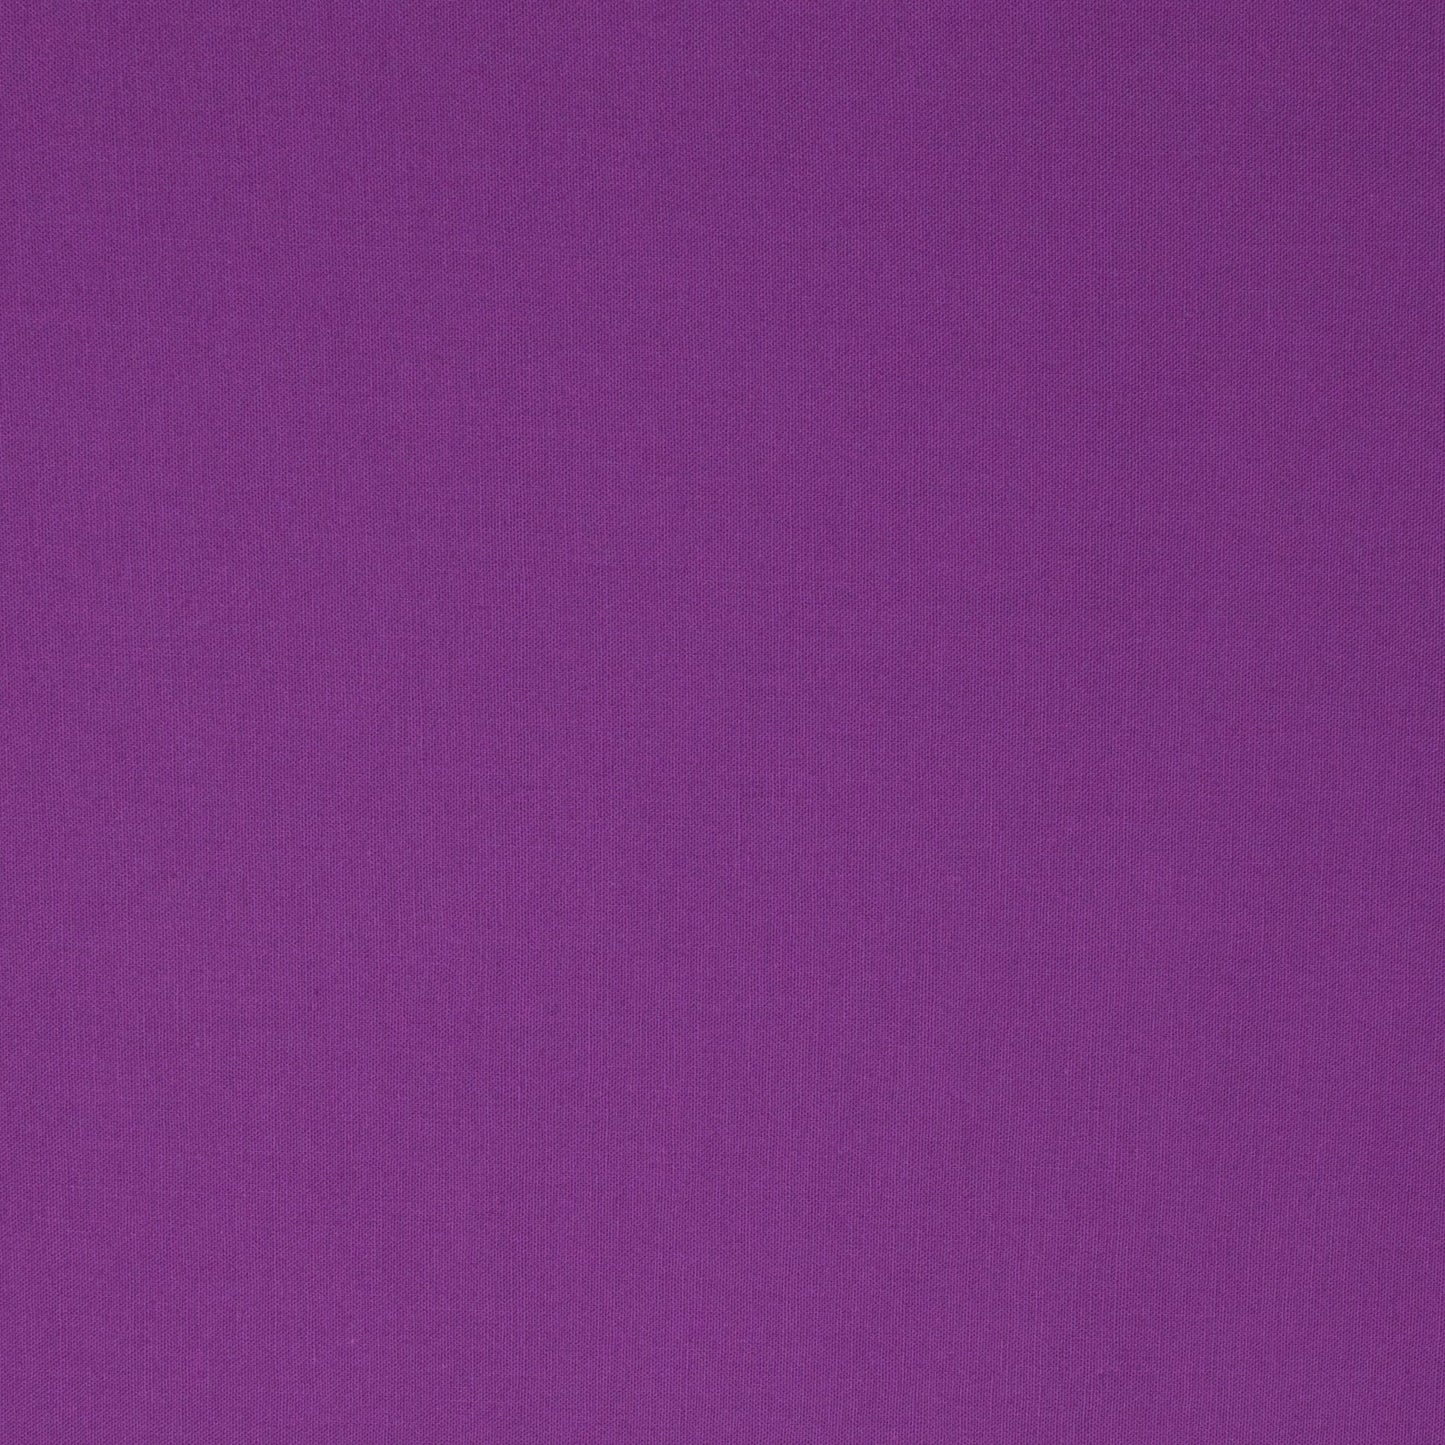 Colorworks Premium Solid African Violet ½ yd